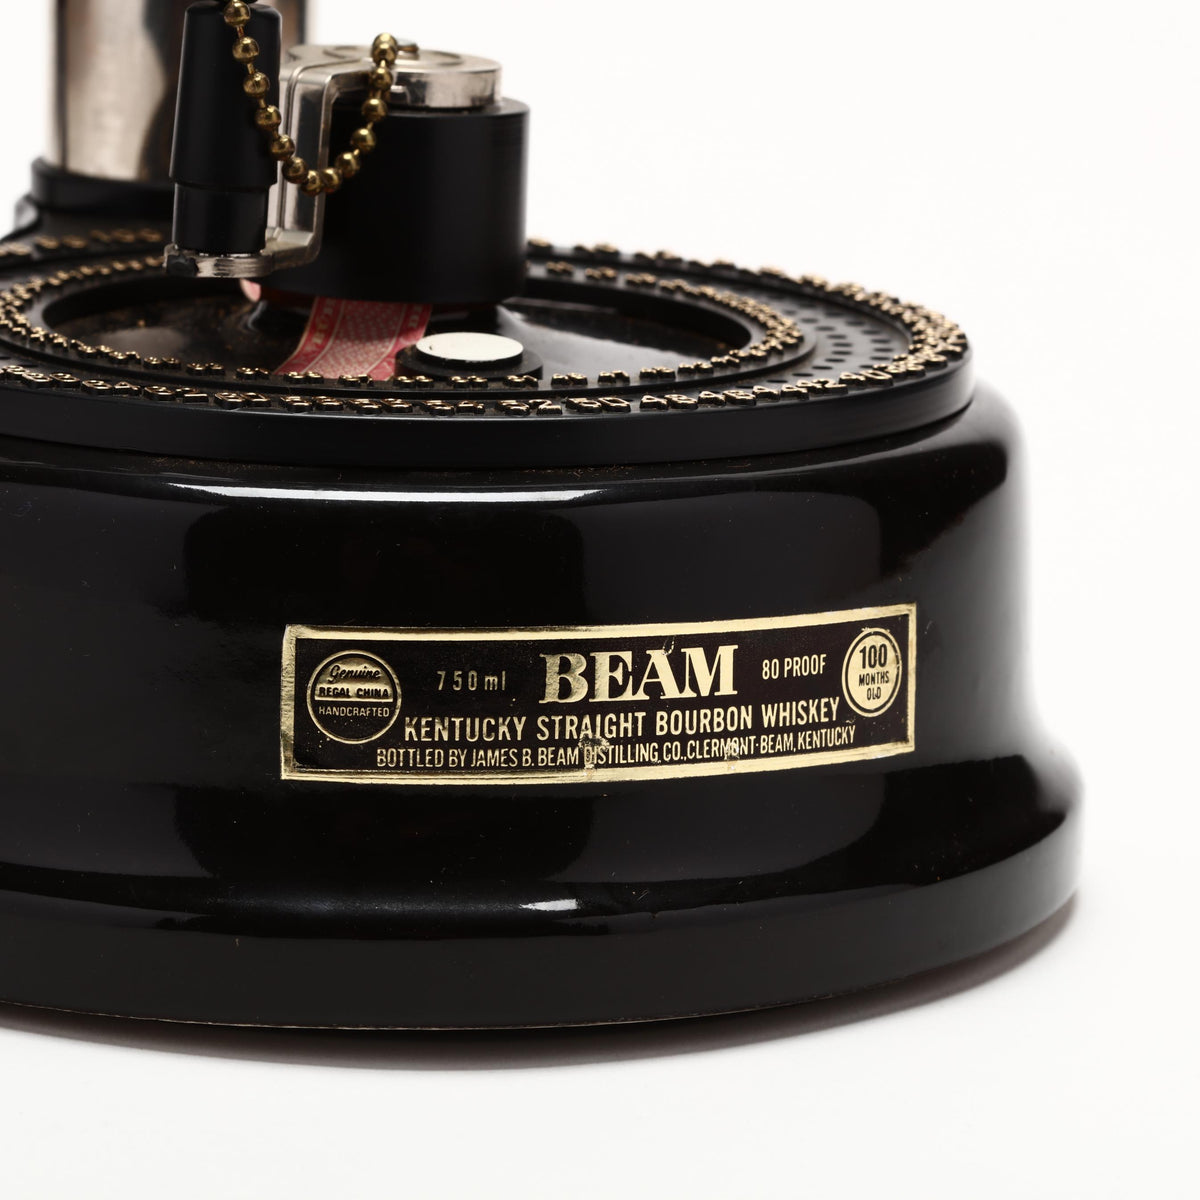 Jim Beam Beam's 1904 "100 Digit" Dial Phone Bottle 750ml